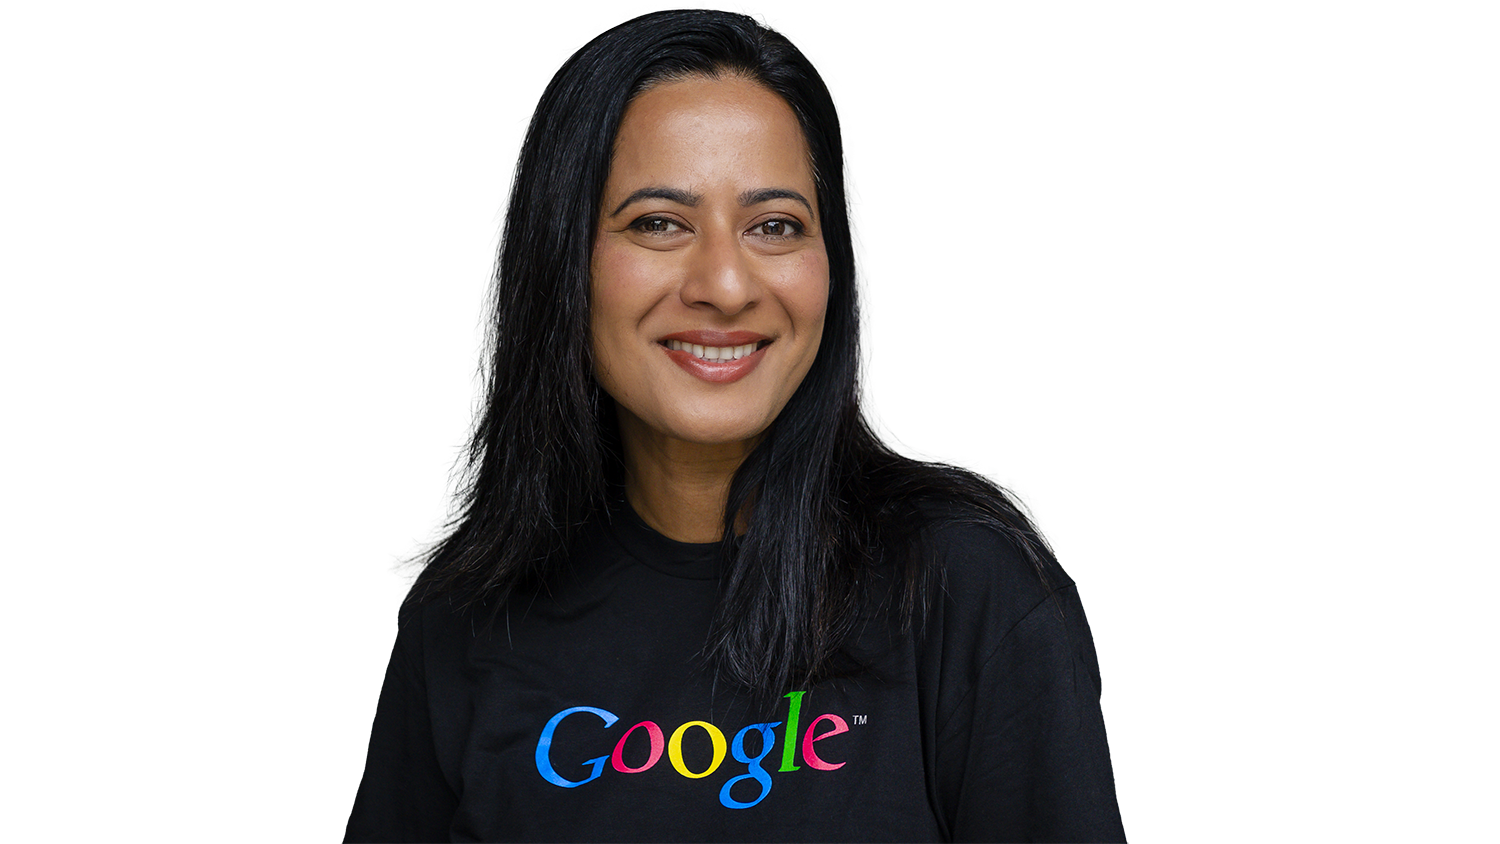 Kamala Subramaniam wearing a Google branded black sweatshirt.